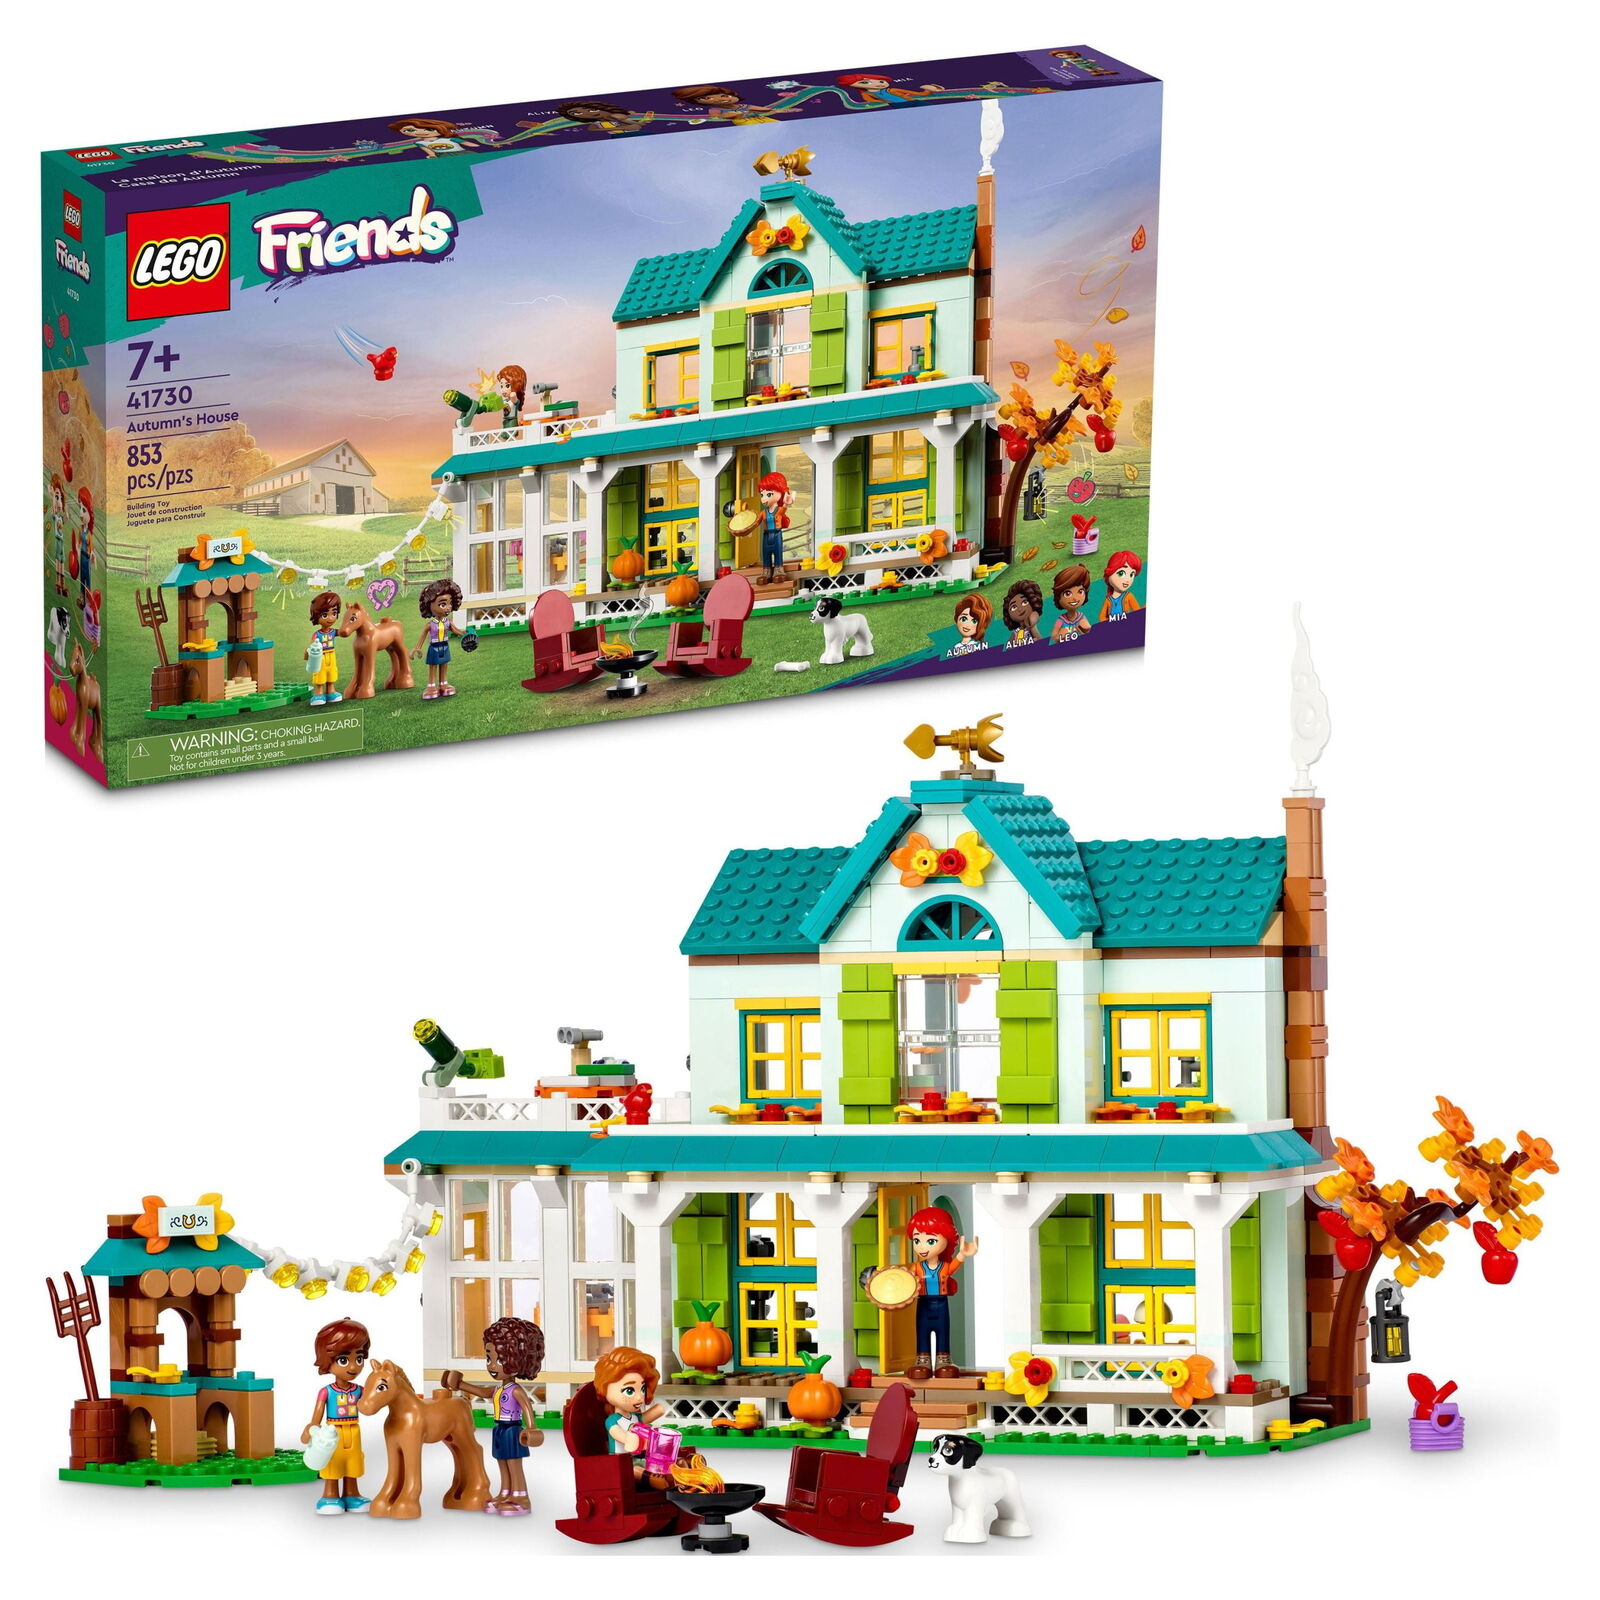 LEGO Friends Autumn's House, Dolls House Toy Playset 41730